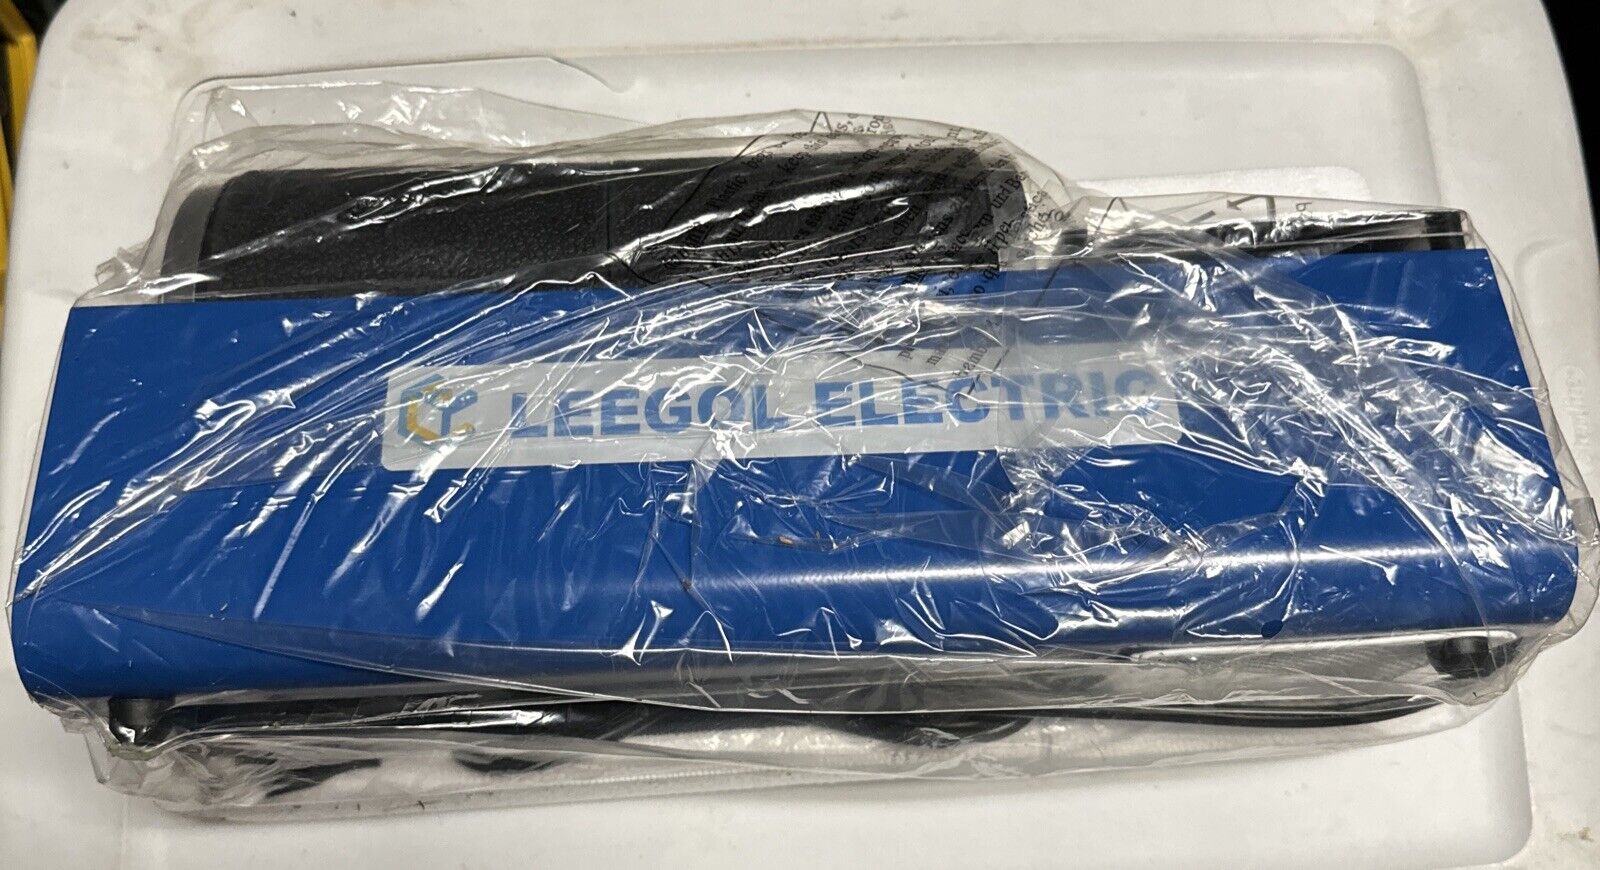 Leegol Electric 6LB Rock Tumbler Kit – Double Drum Rock Polisher